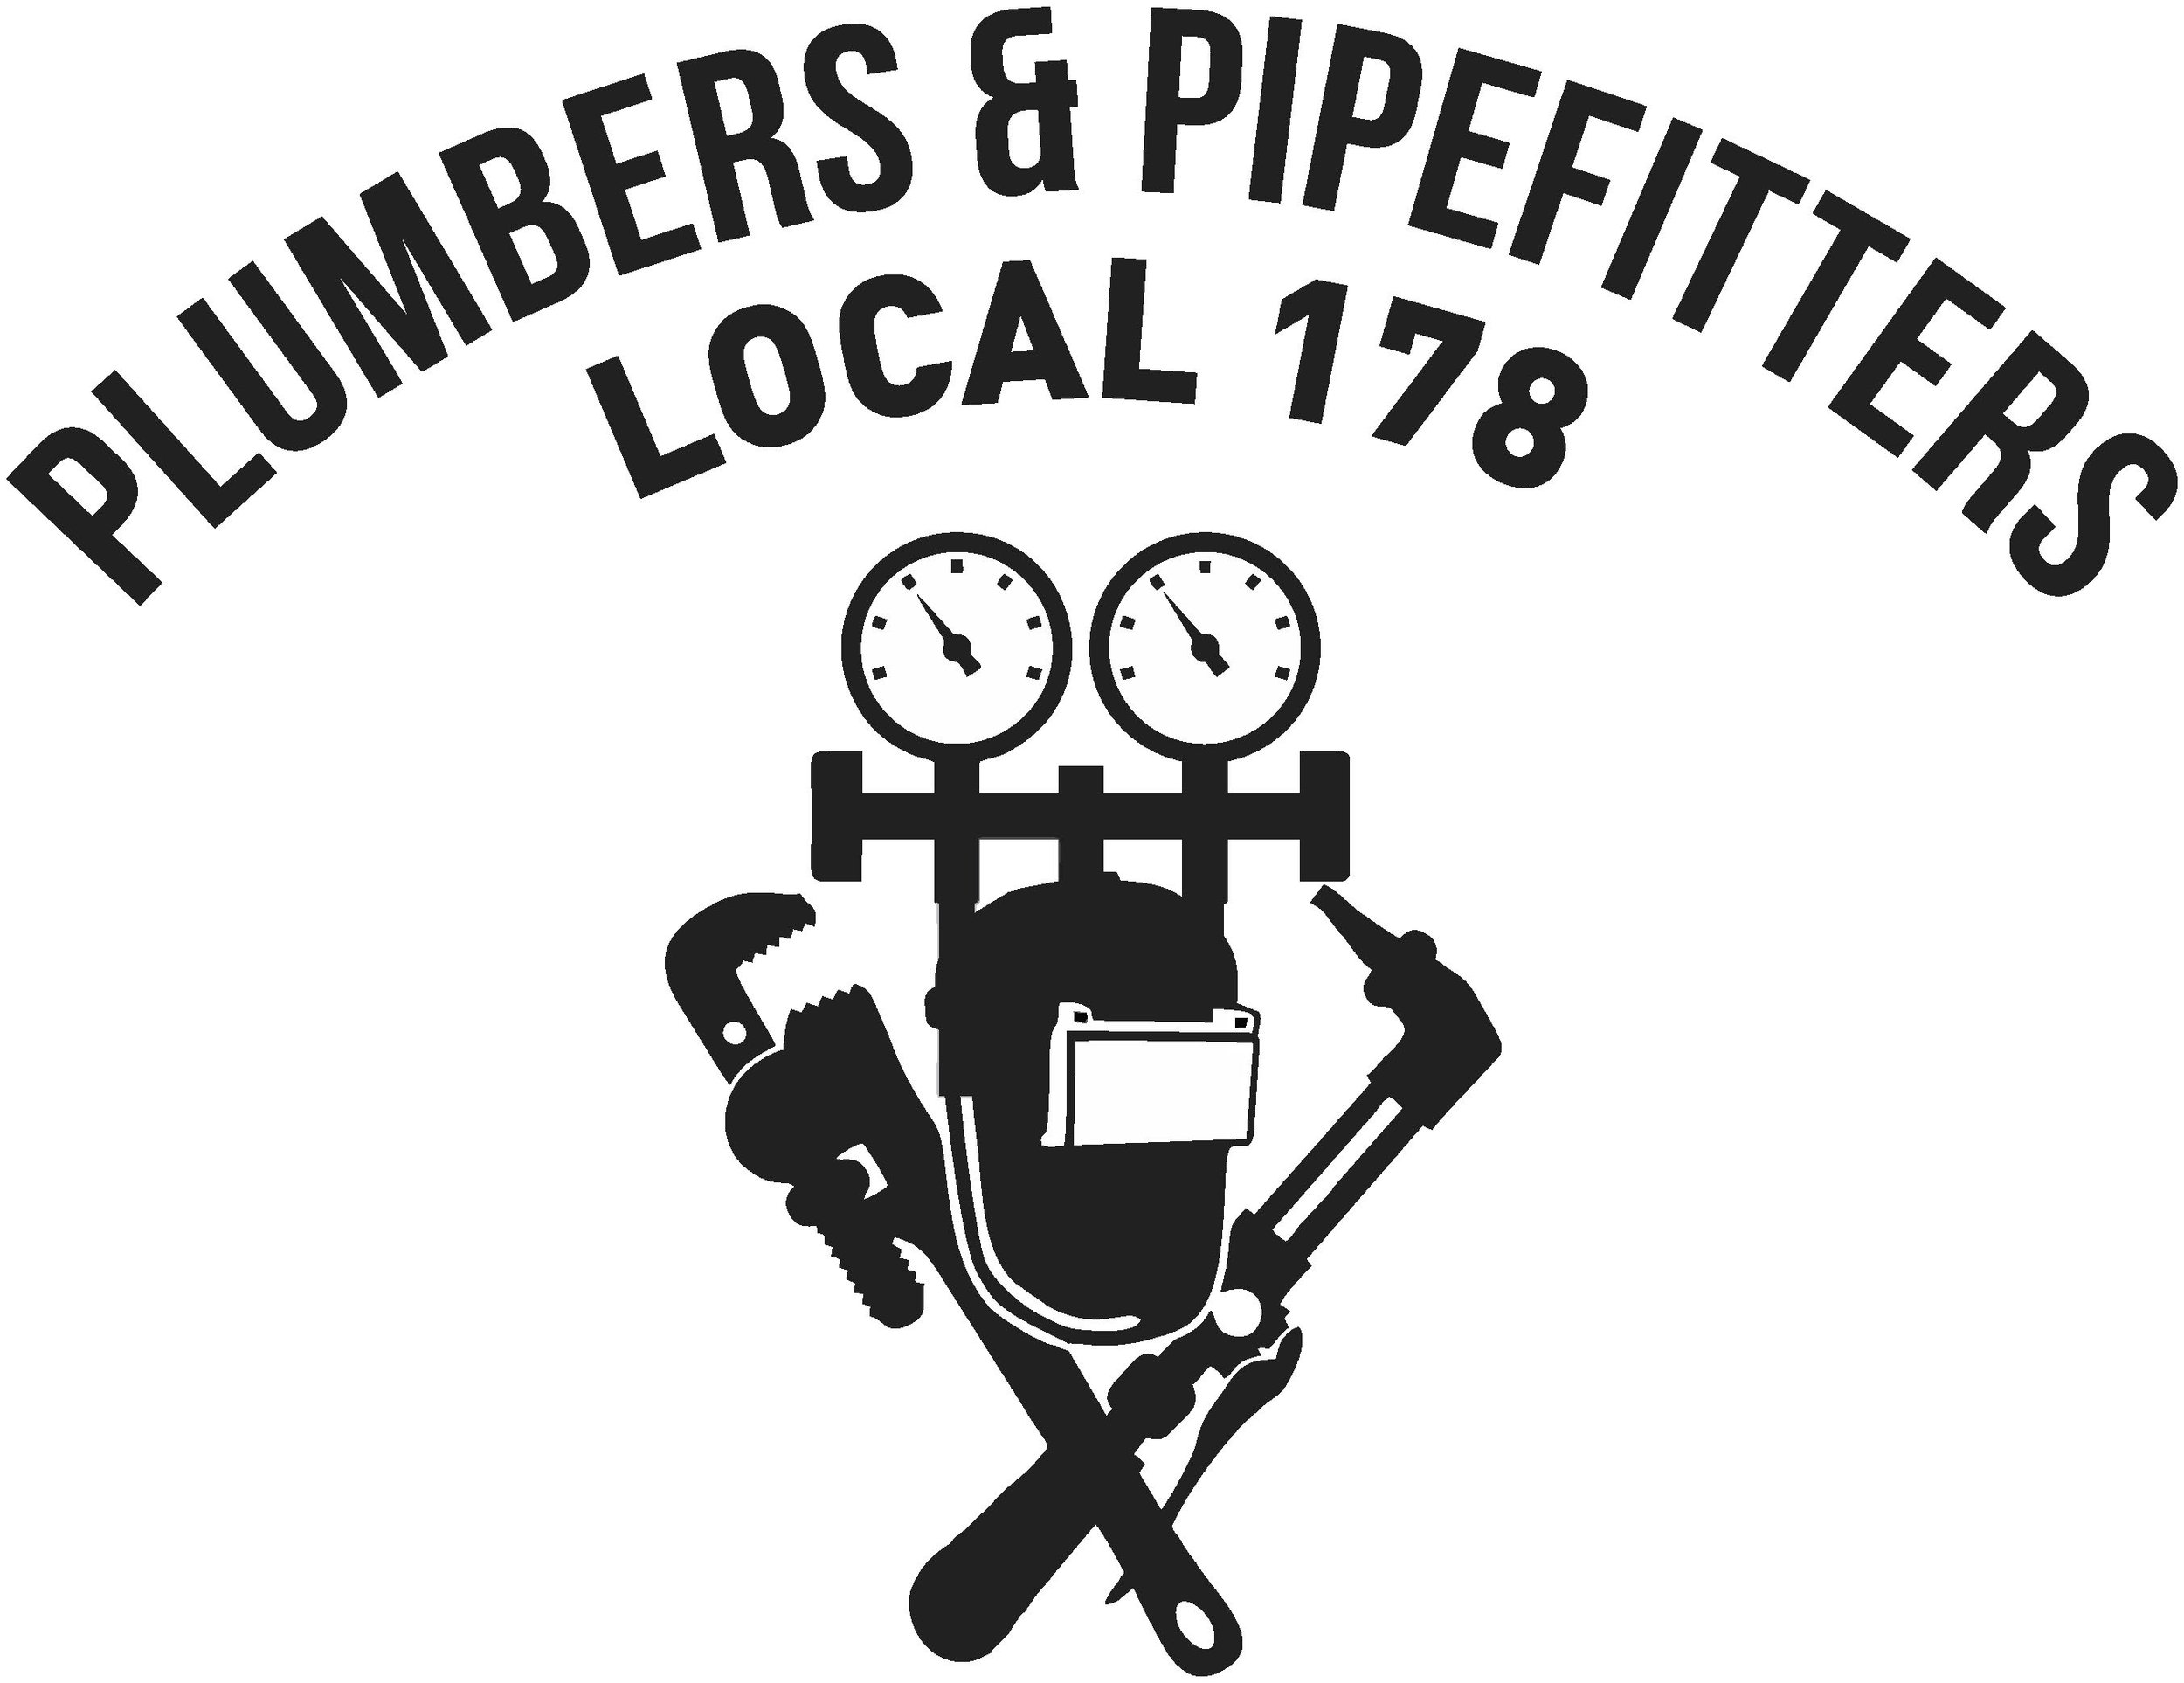 Plumbers &amp; Pipefitters Local 178